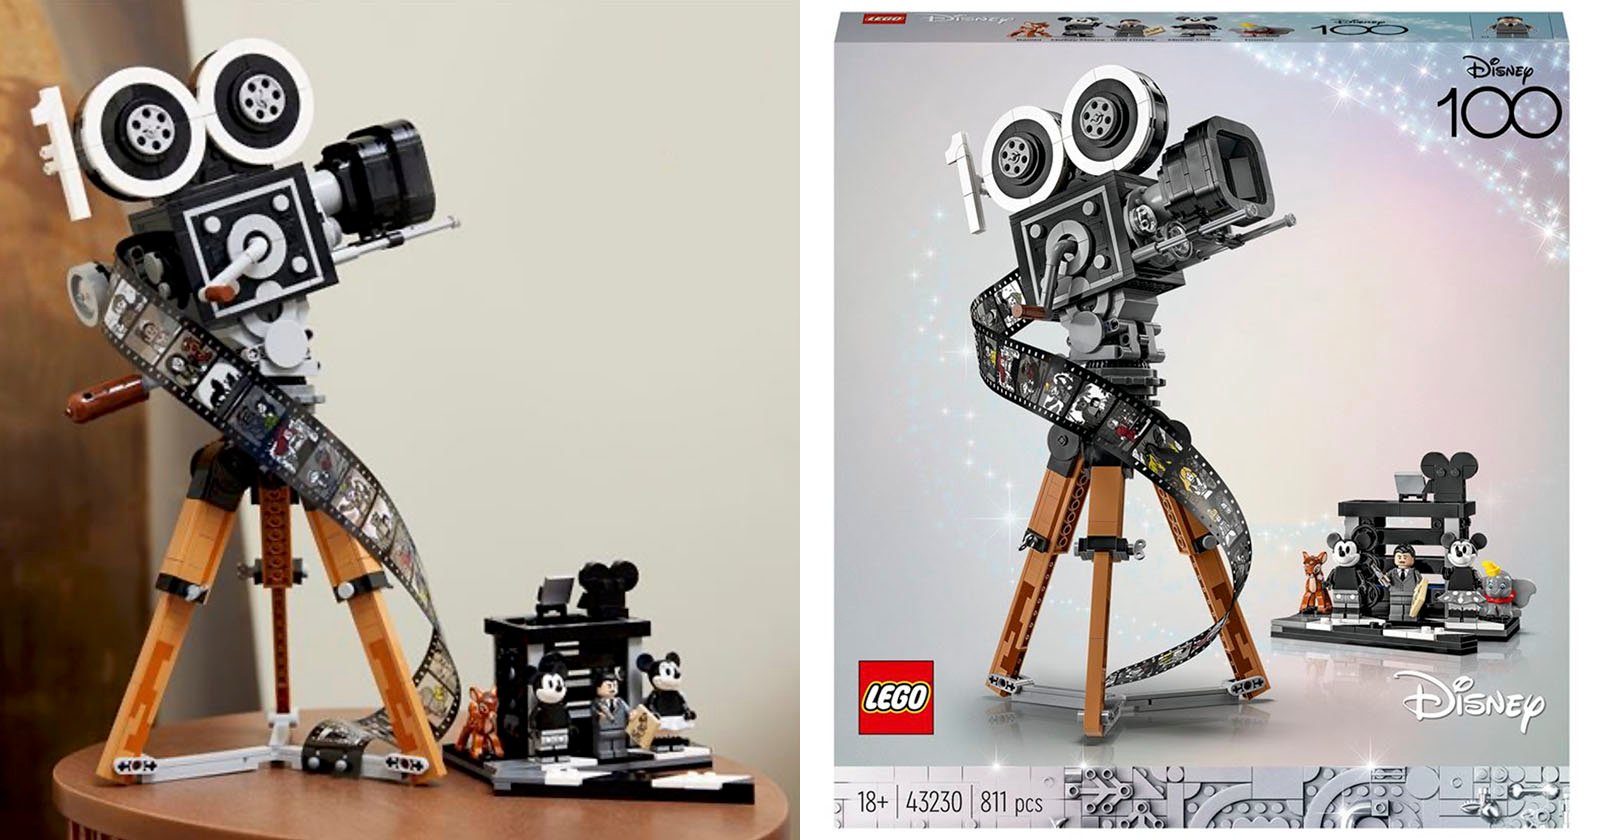 LEGO Celebrates Disney's Centennial with Beautiful Cinema Camera